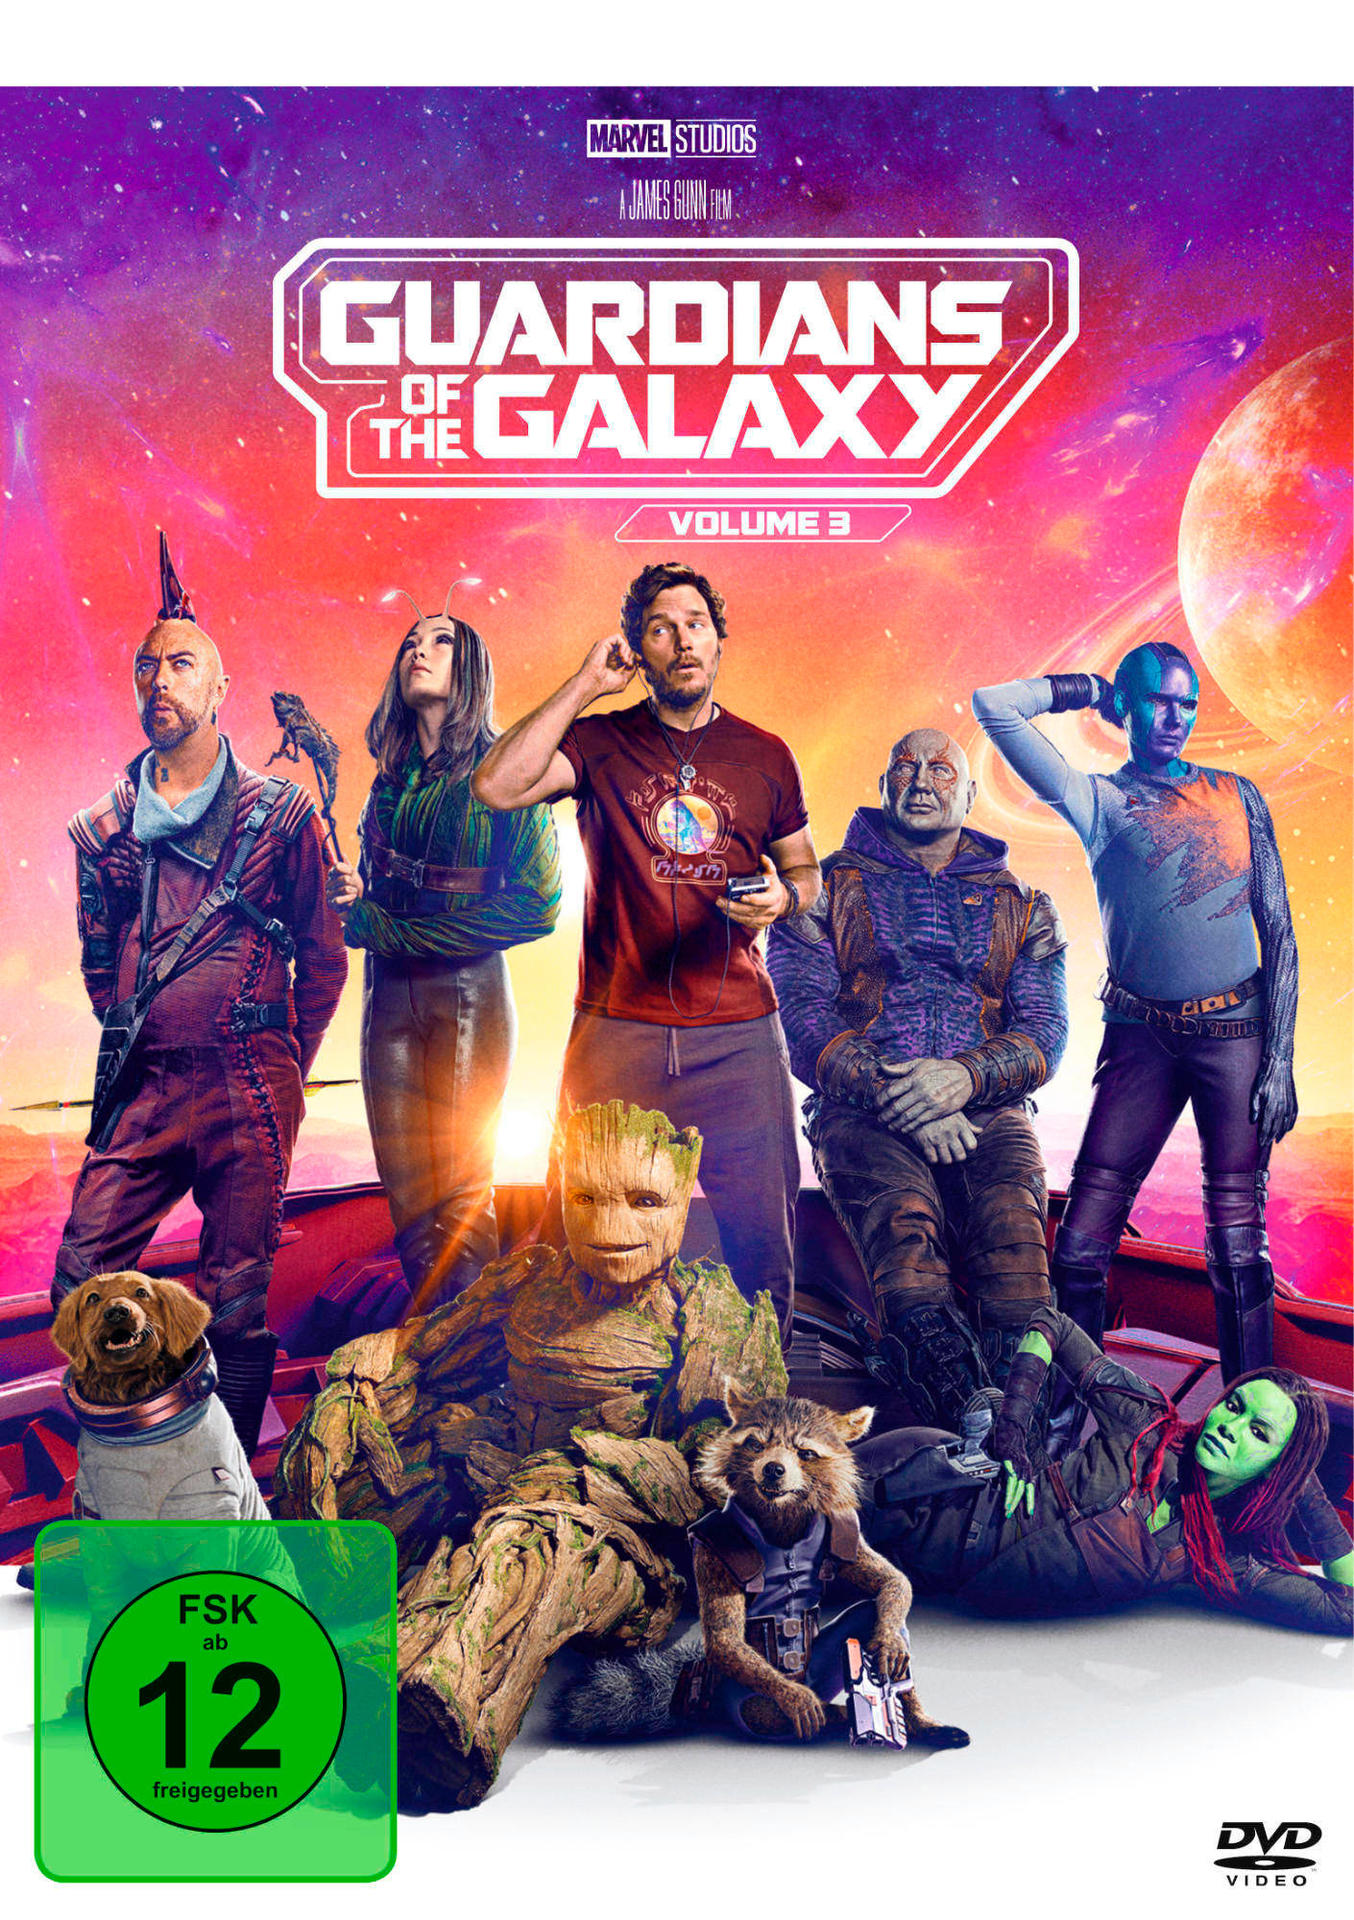 Vol. the of 3 Guardians DVD Galaxy